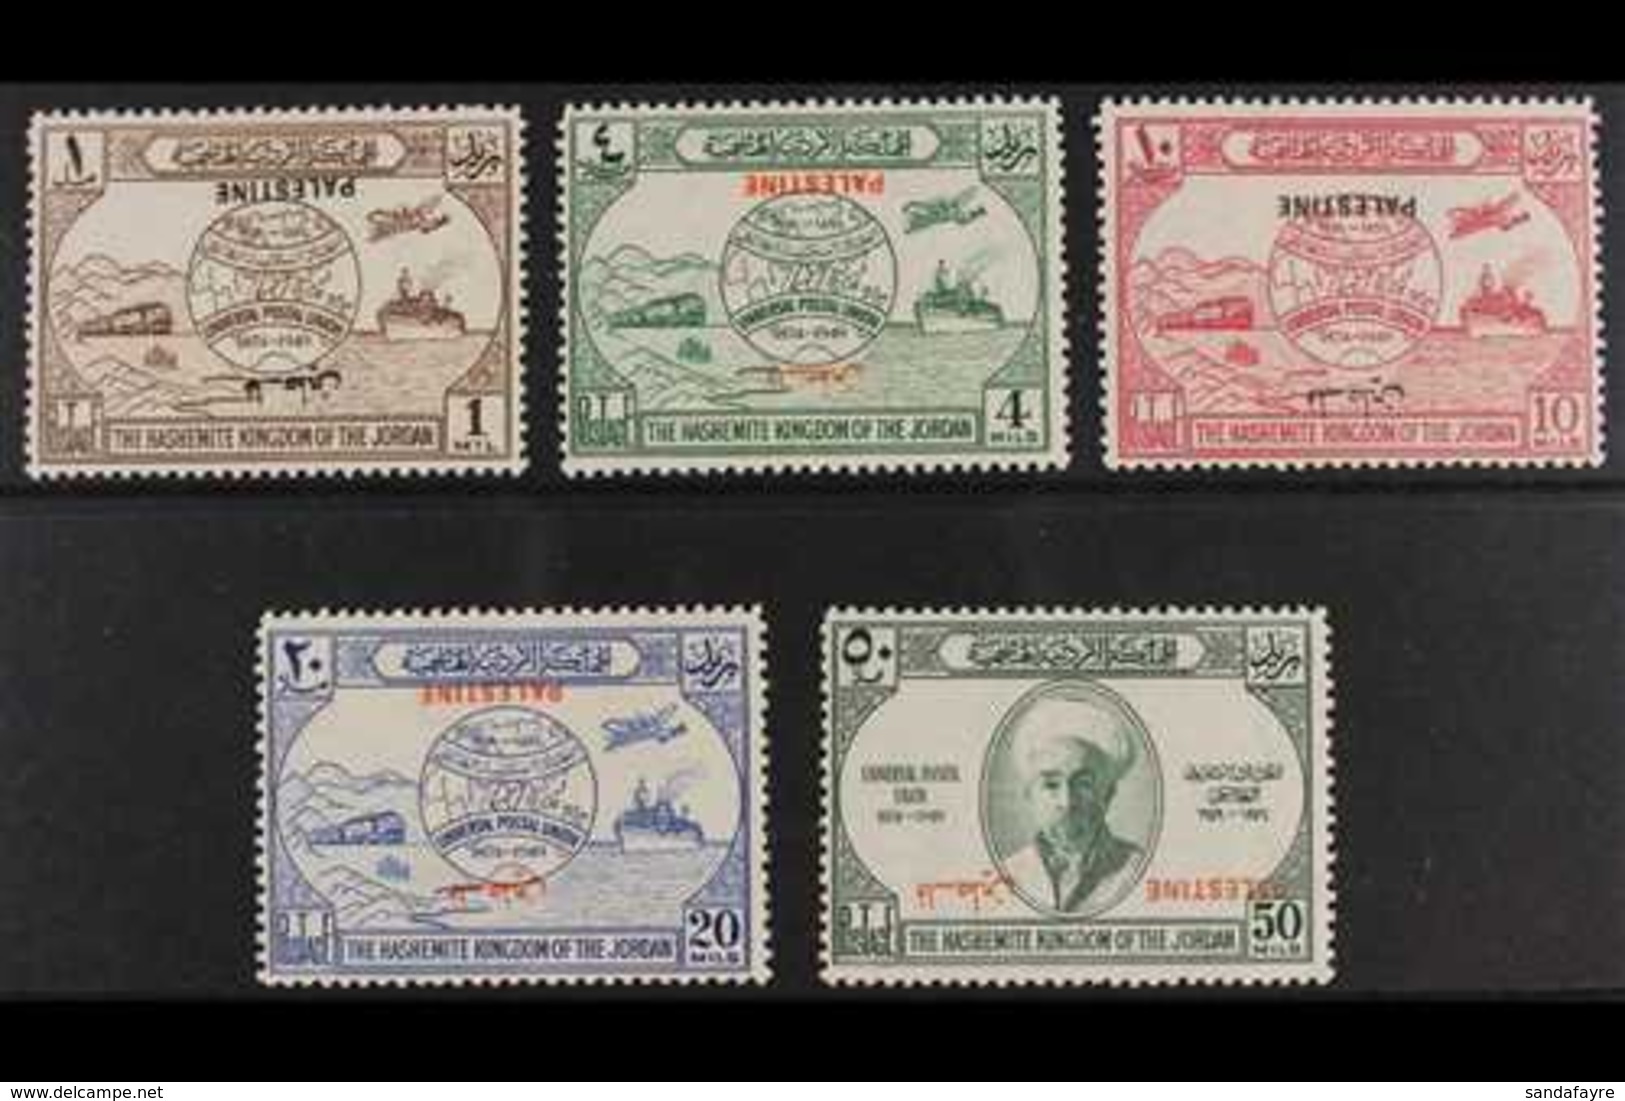 JORDANIAN OCCUPATION 1949 Universal Postal Union Complete Set All With OVERPRINTS INVERTED Varieties, SG P30a/P34b, Neve - Palestine